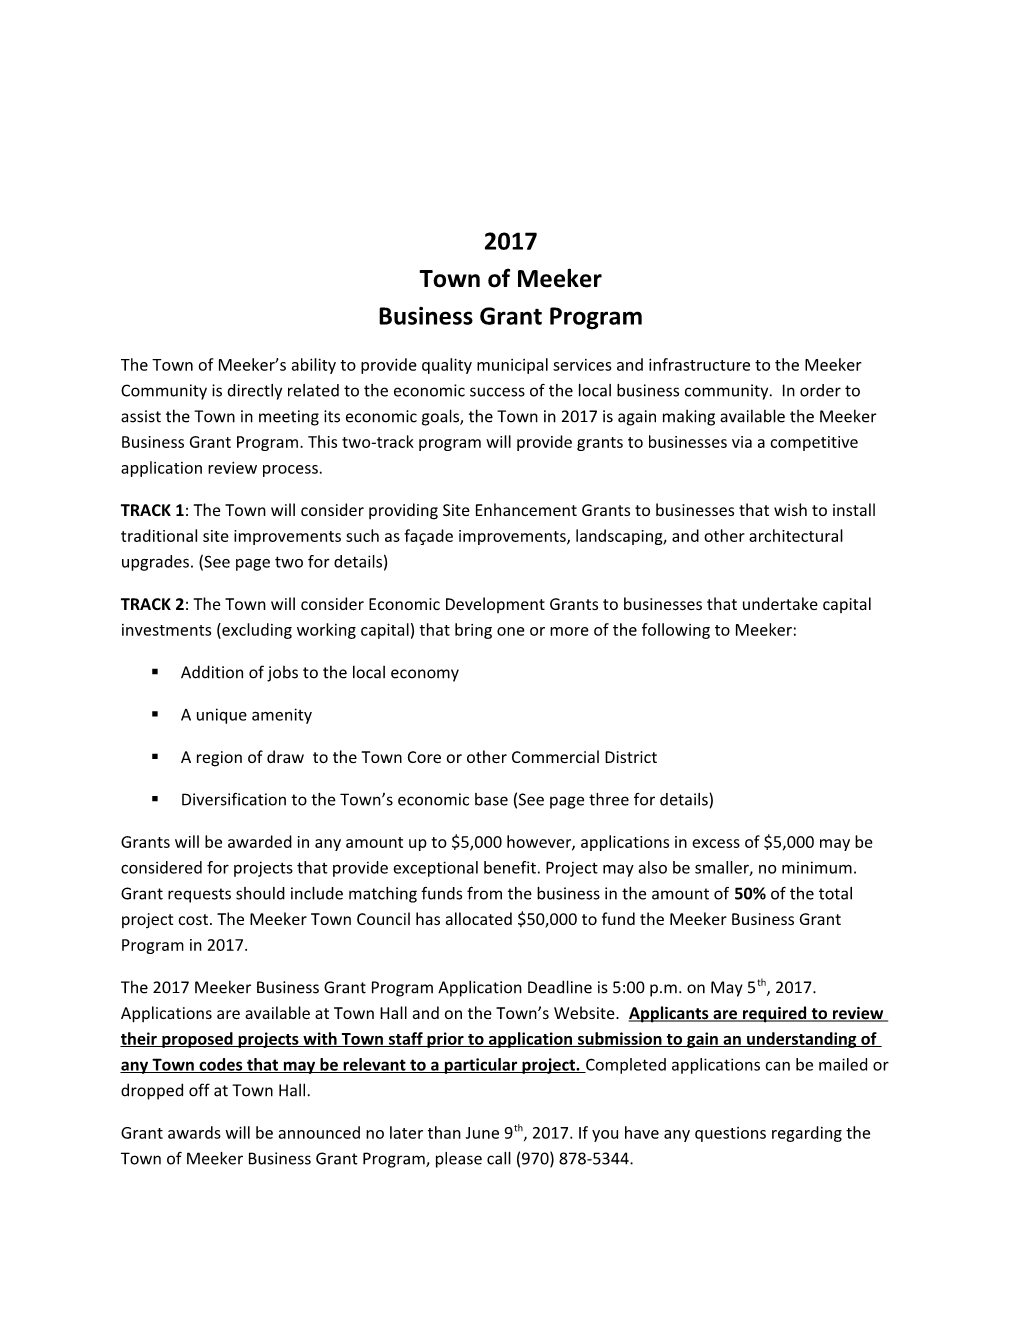 2017 Town of Meeker Business Grant Program